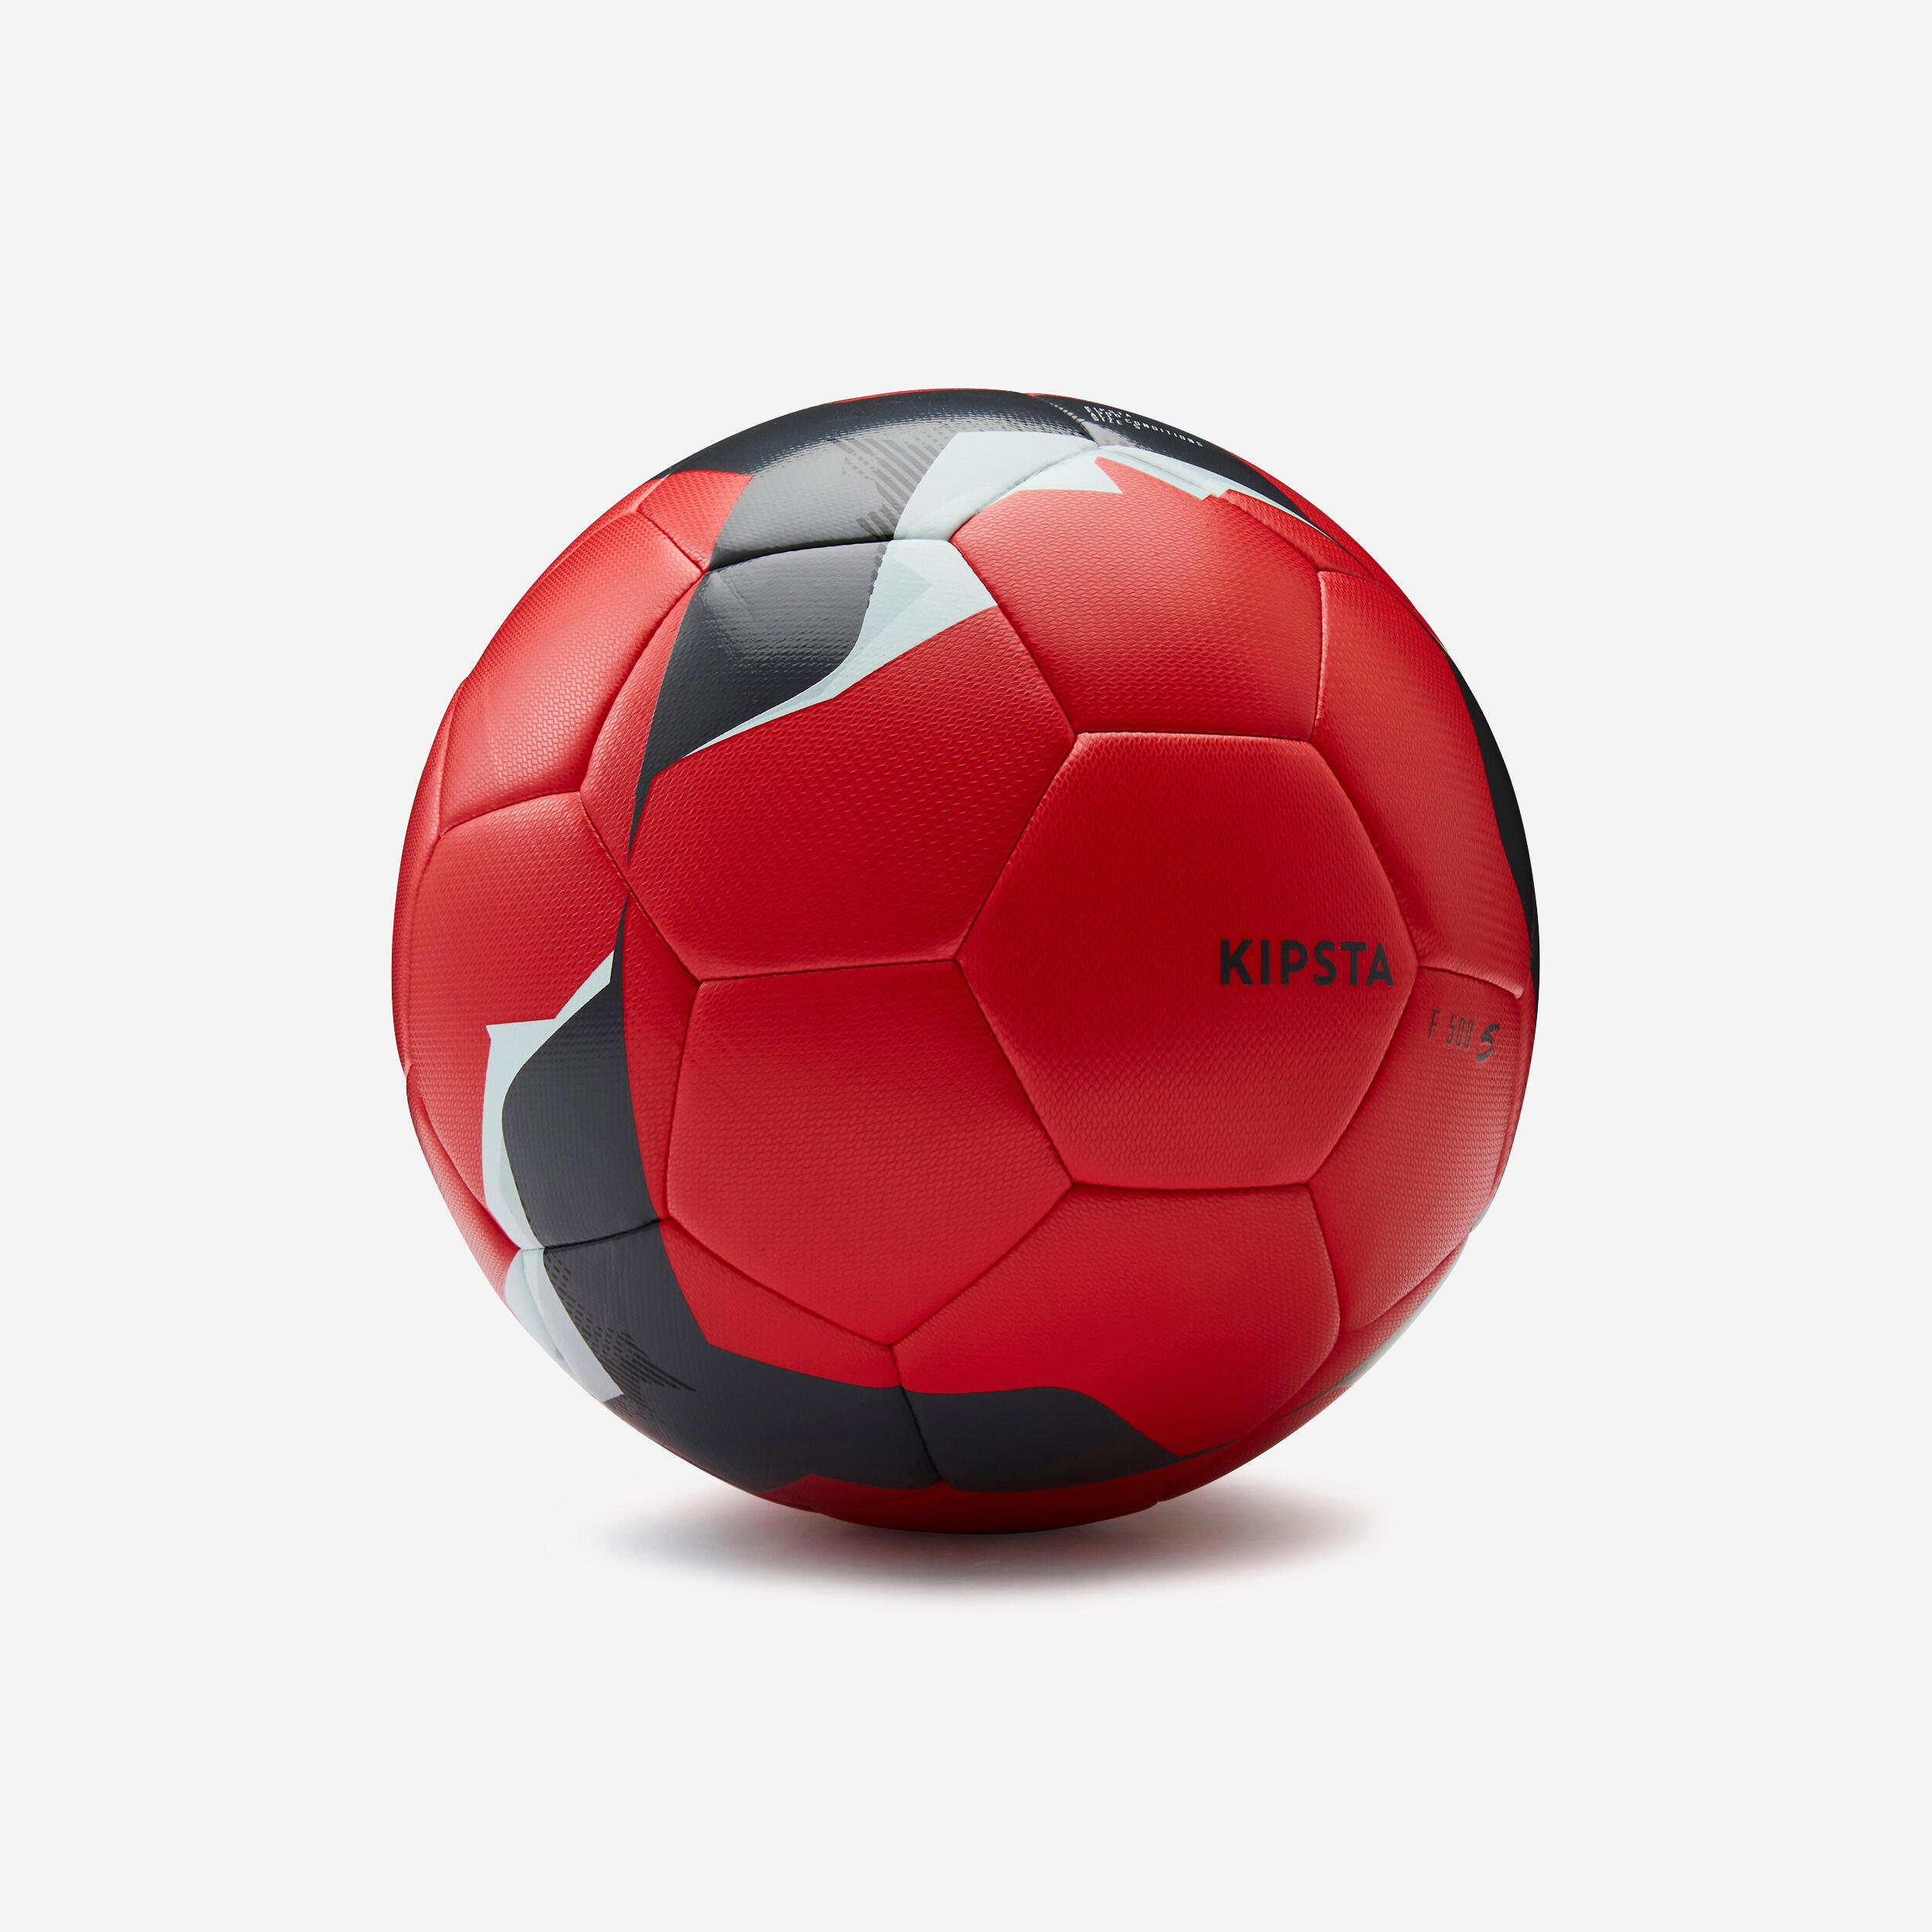 KIPSTA Adult size 5 fifa hybrid football, red